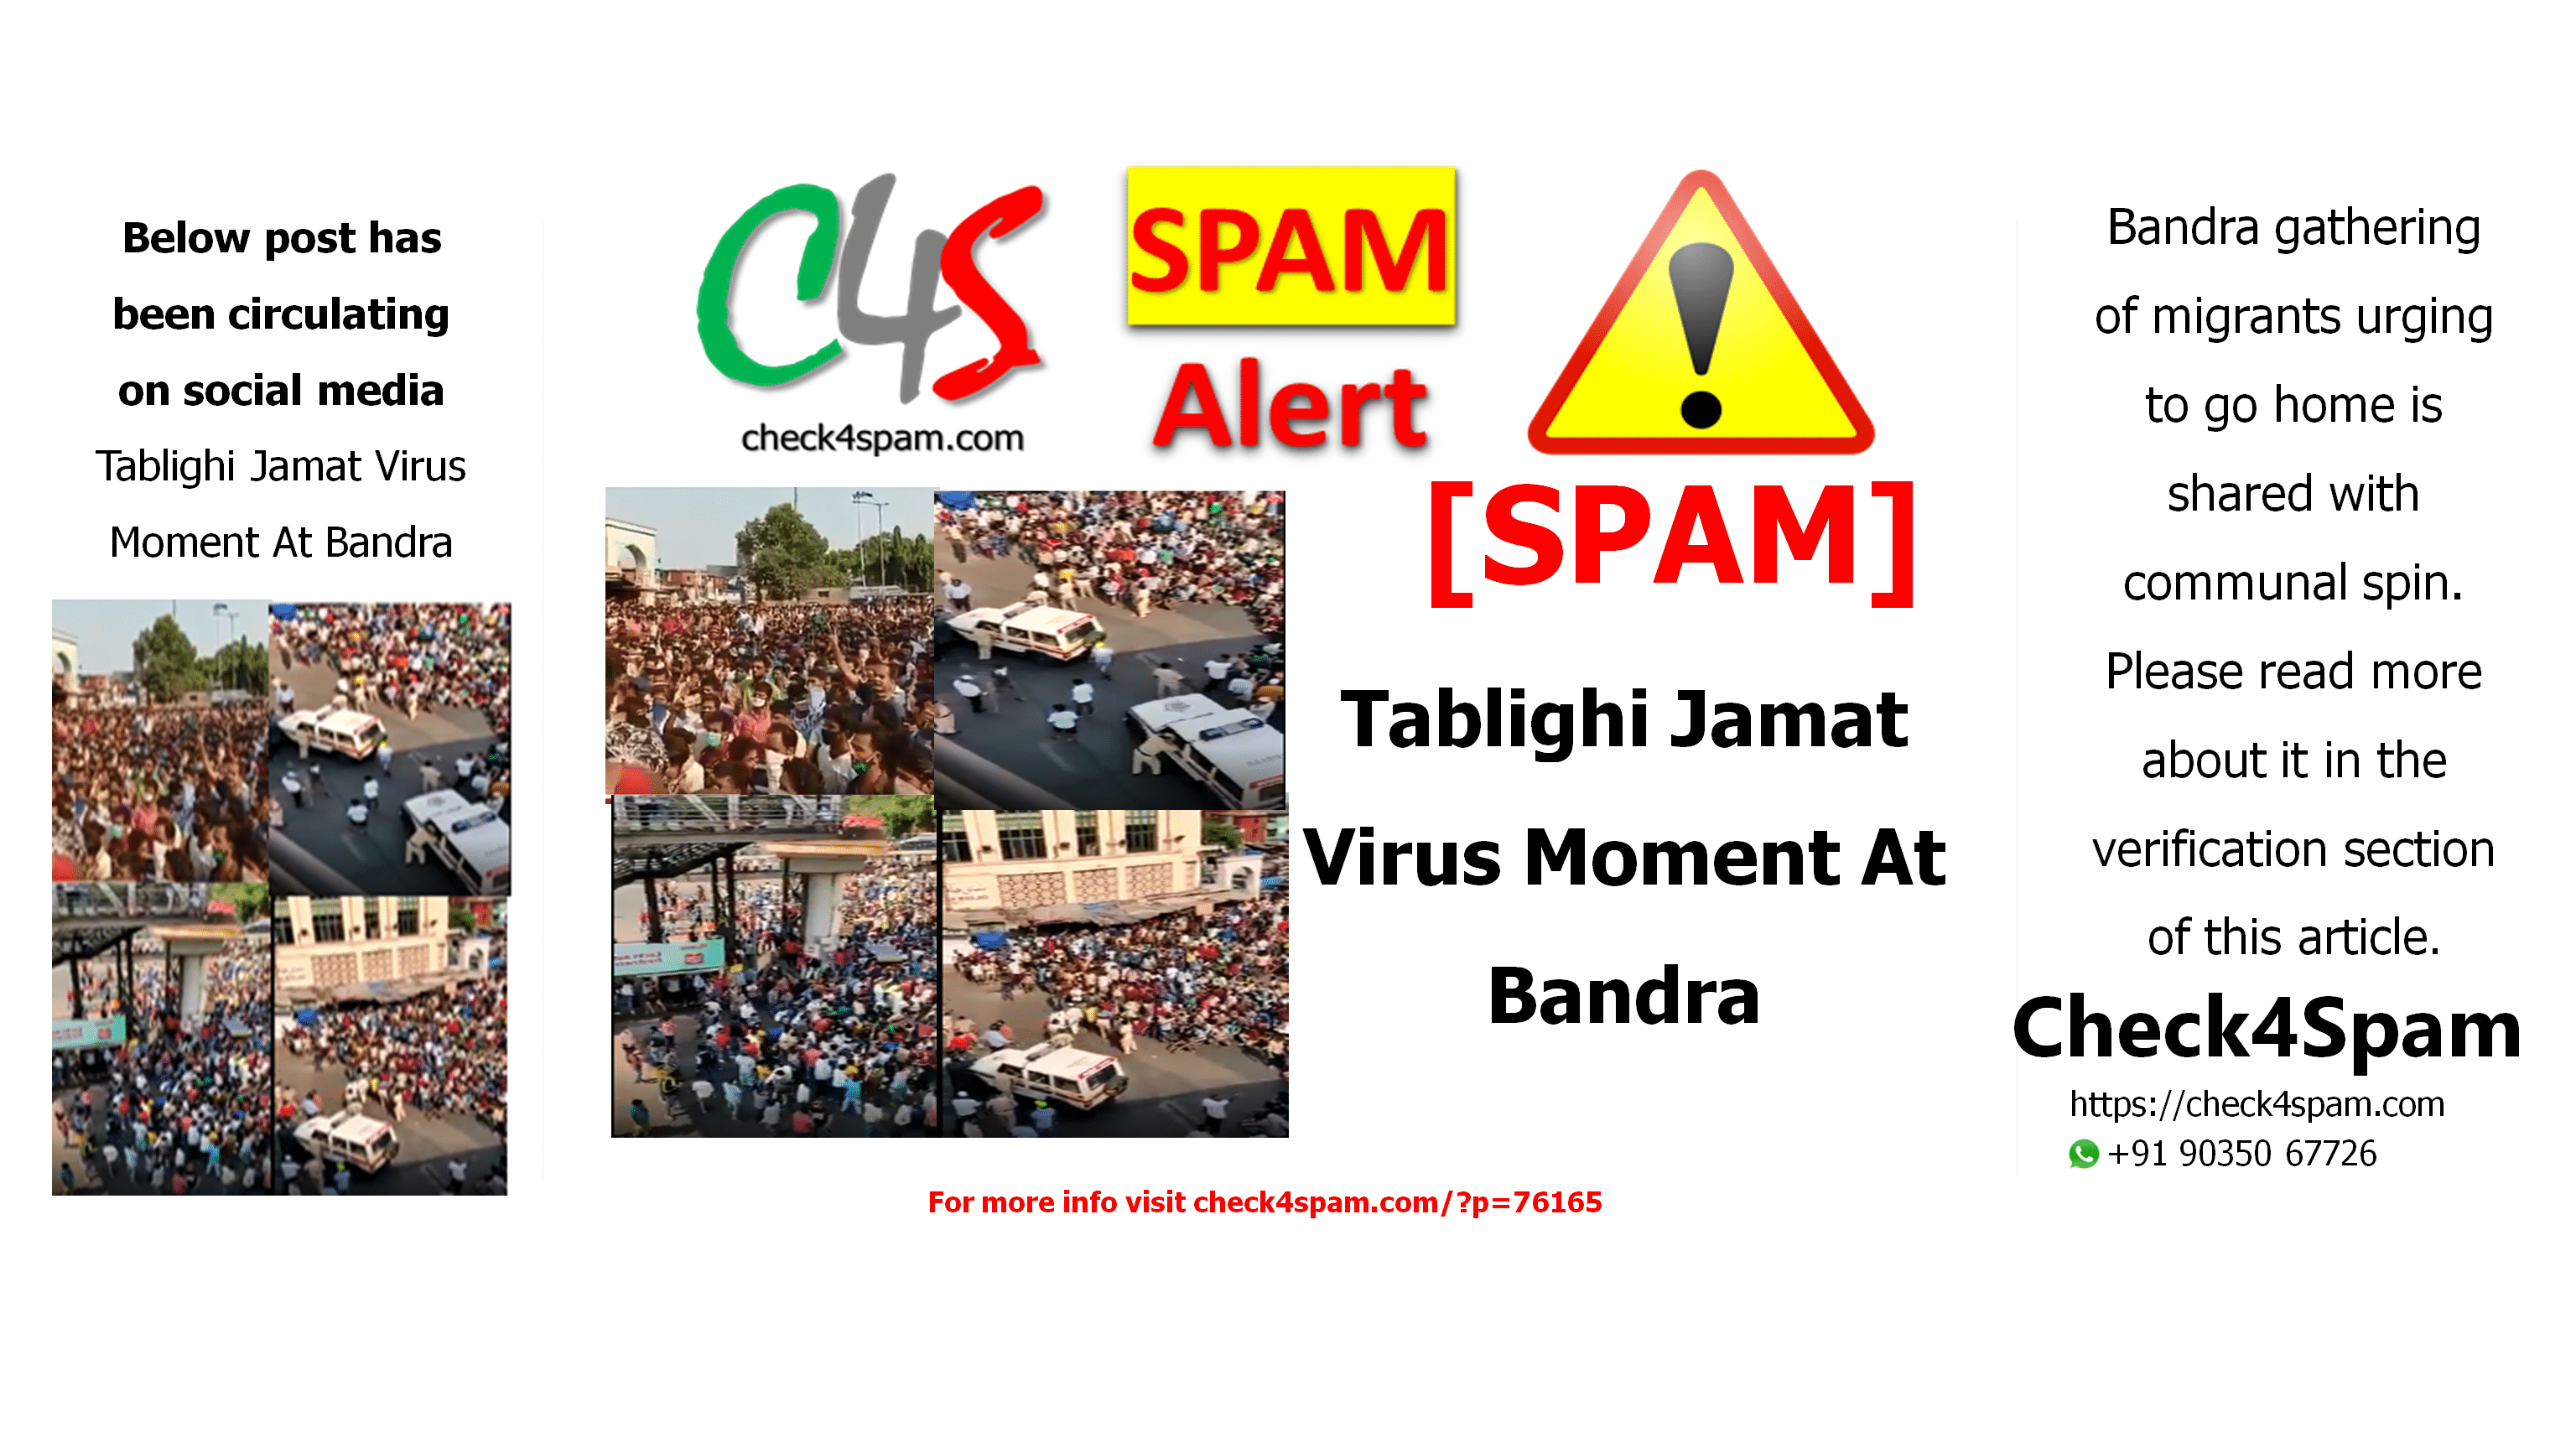 Tablighi Jamat Virus Moment At Bandra